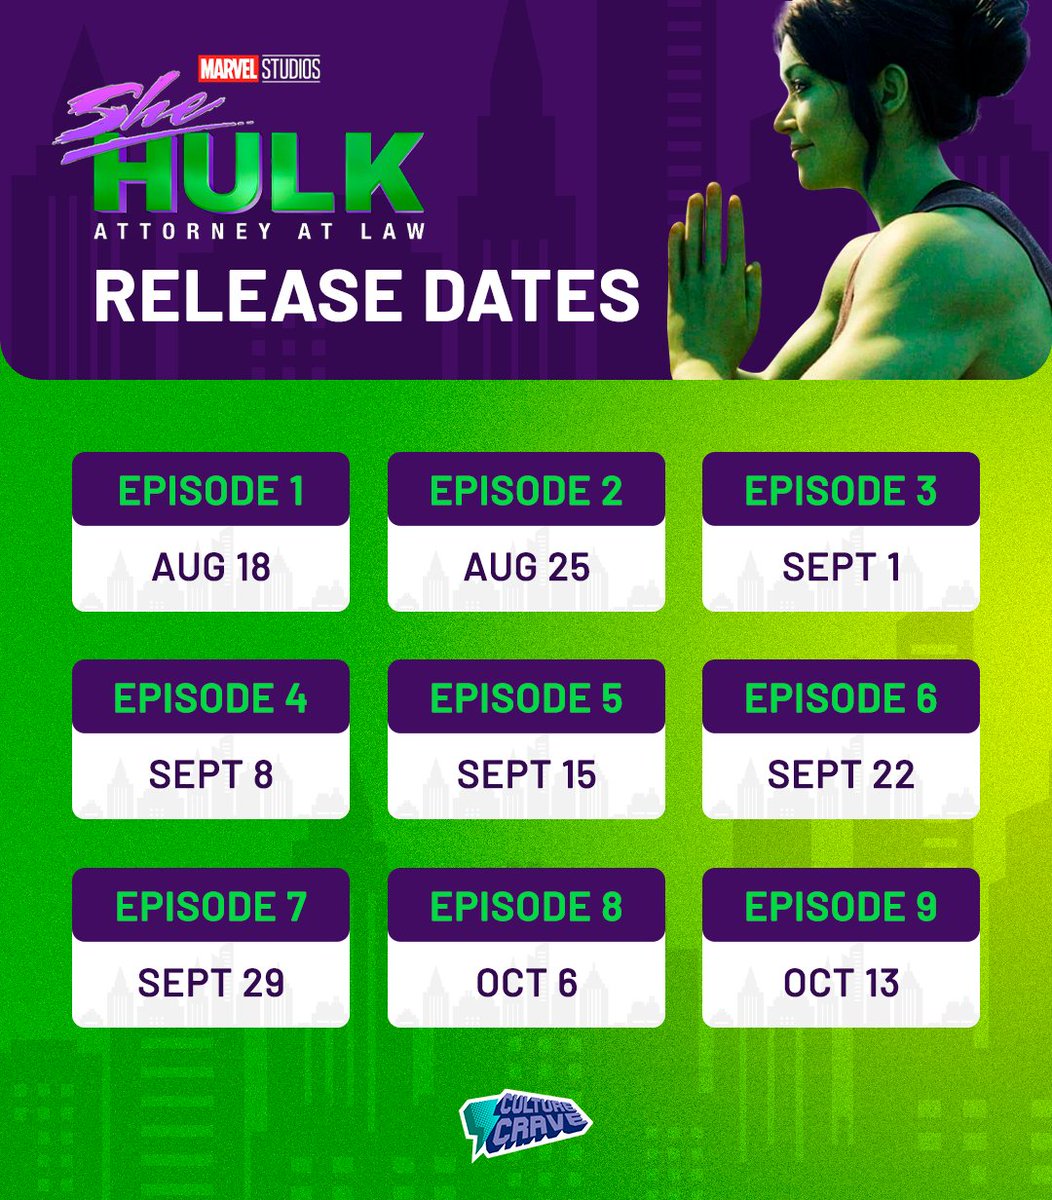 Release dates for #SheHulk